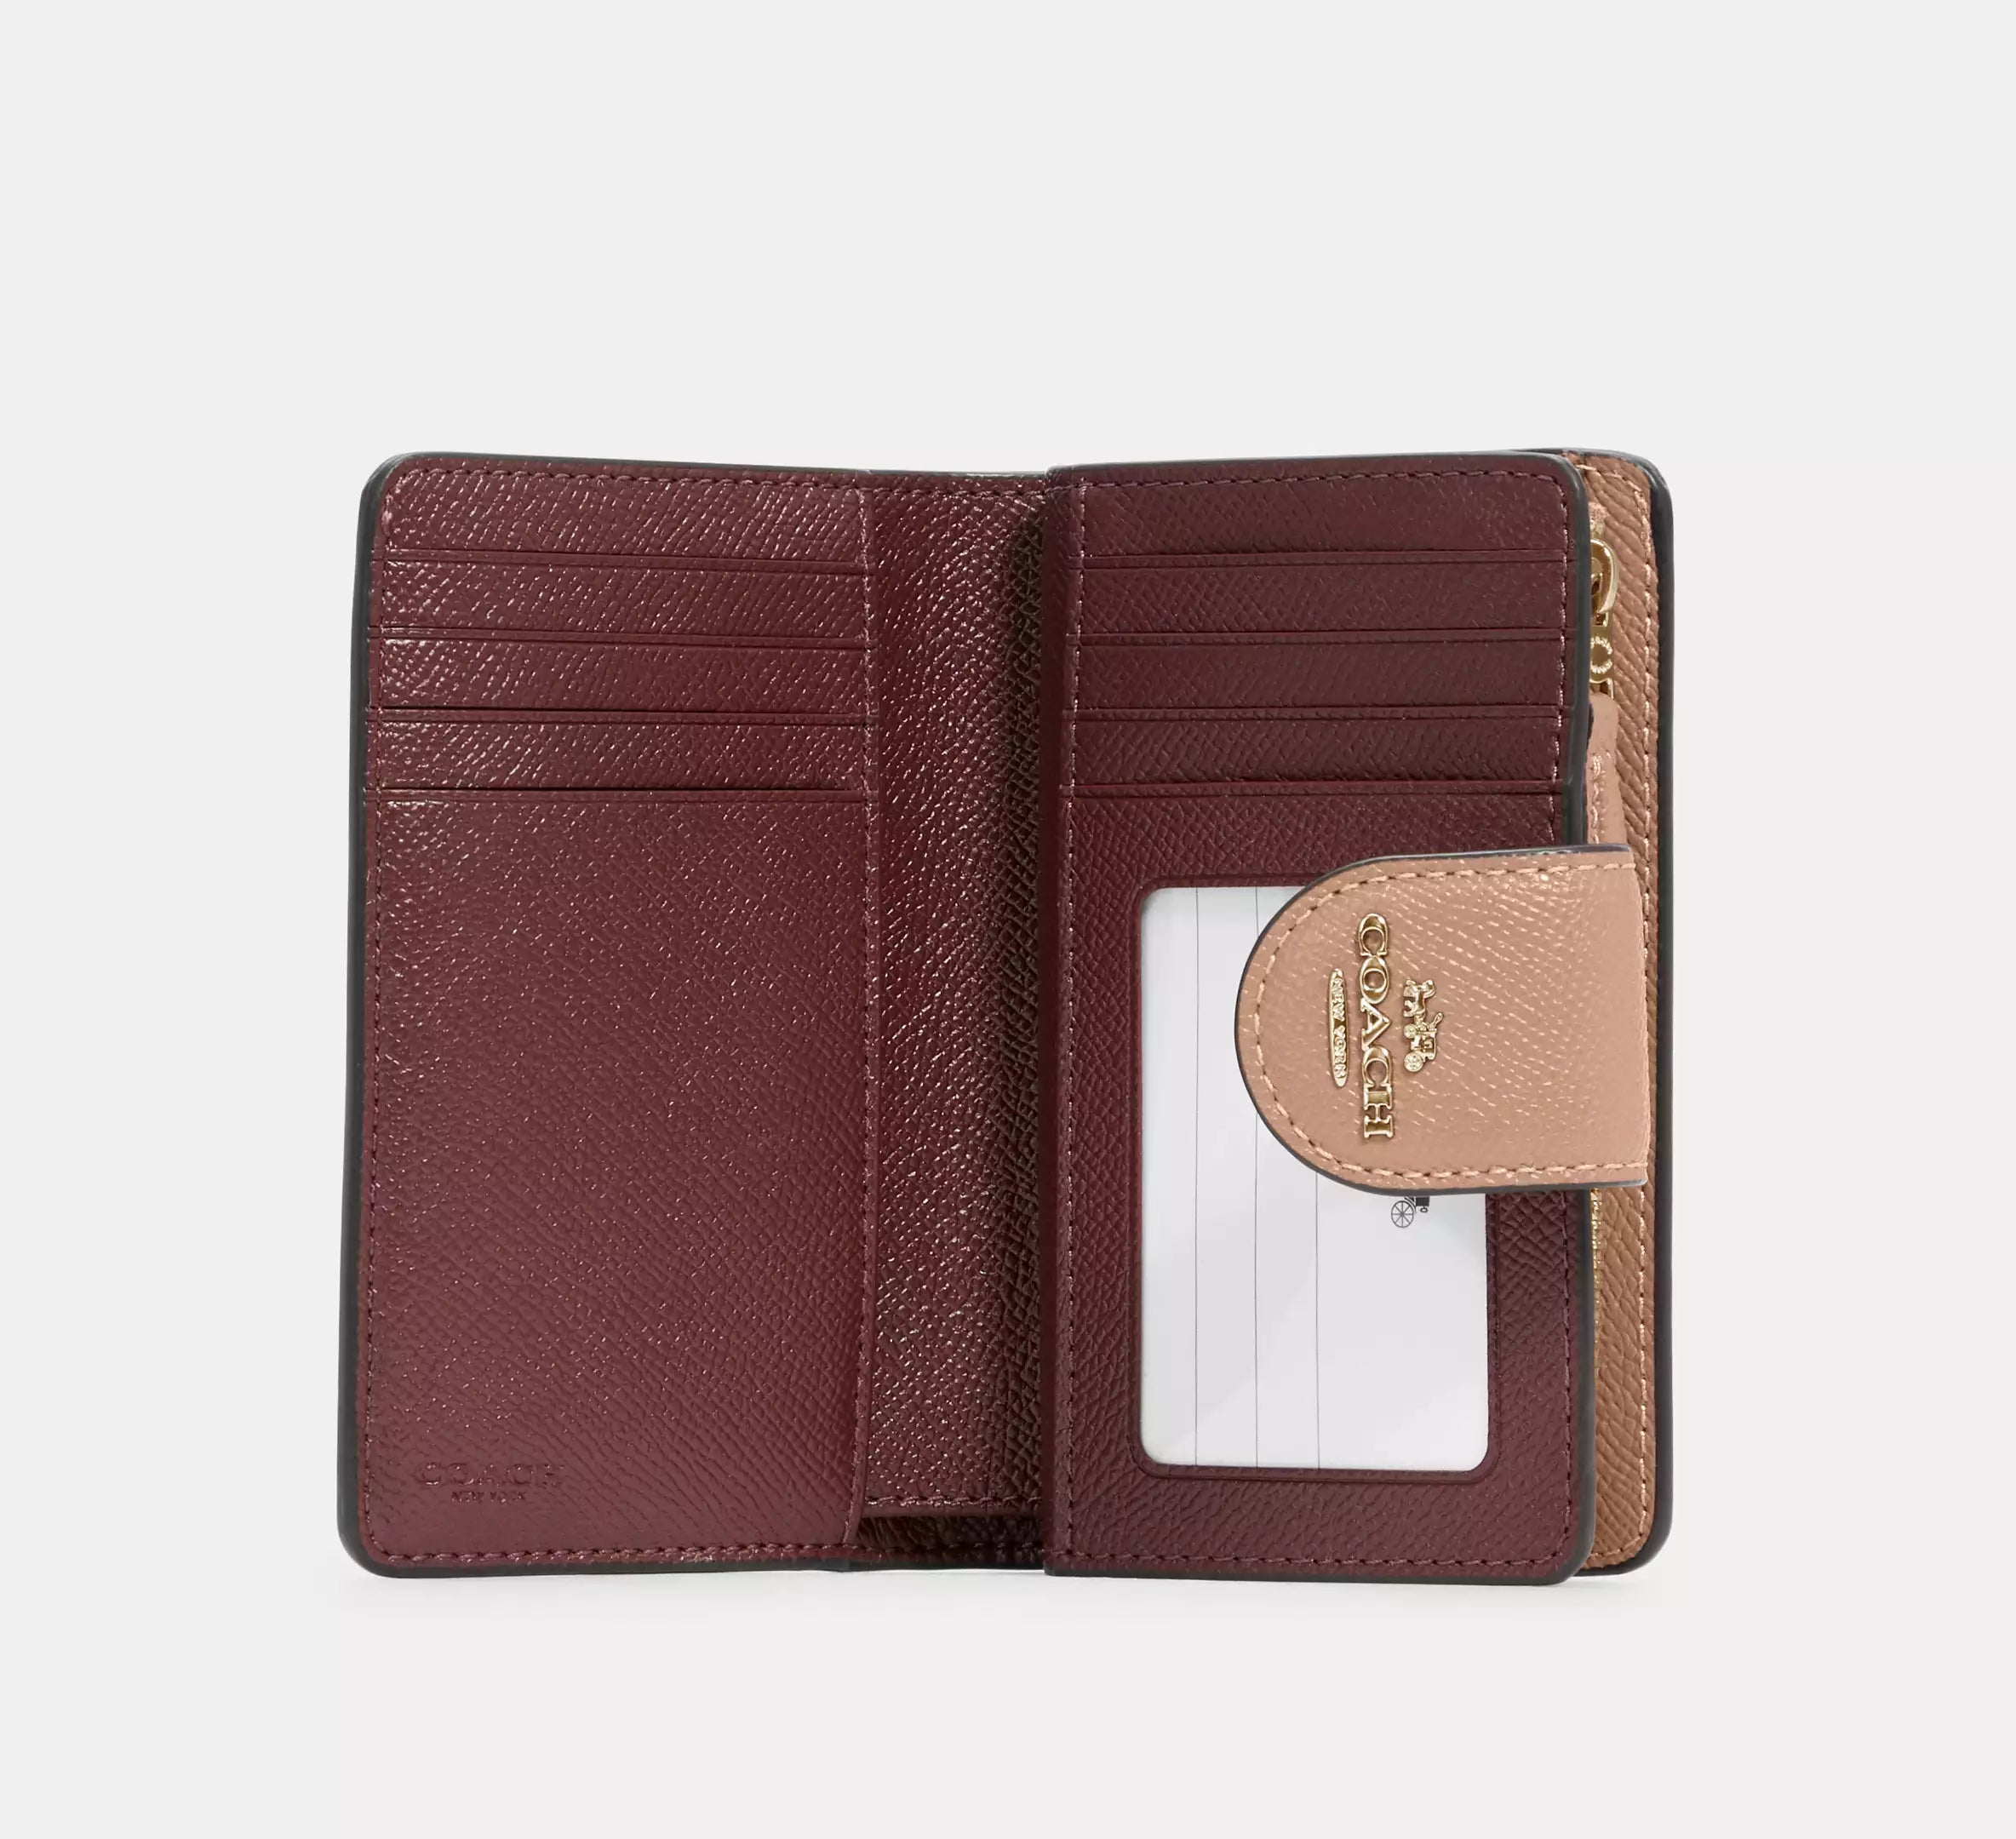 C0ACH Crossgrain Leather Medium Corner Zip Wallet in Taupe (6390)